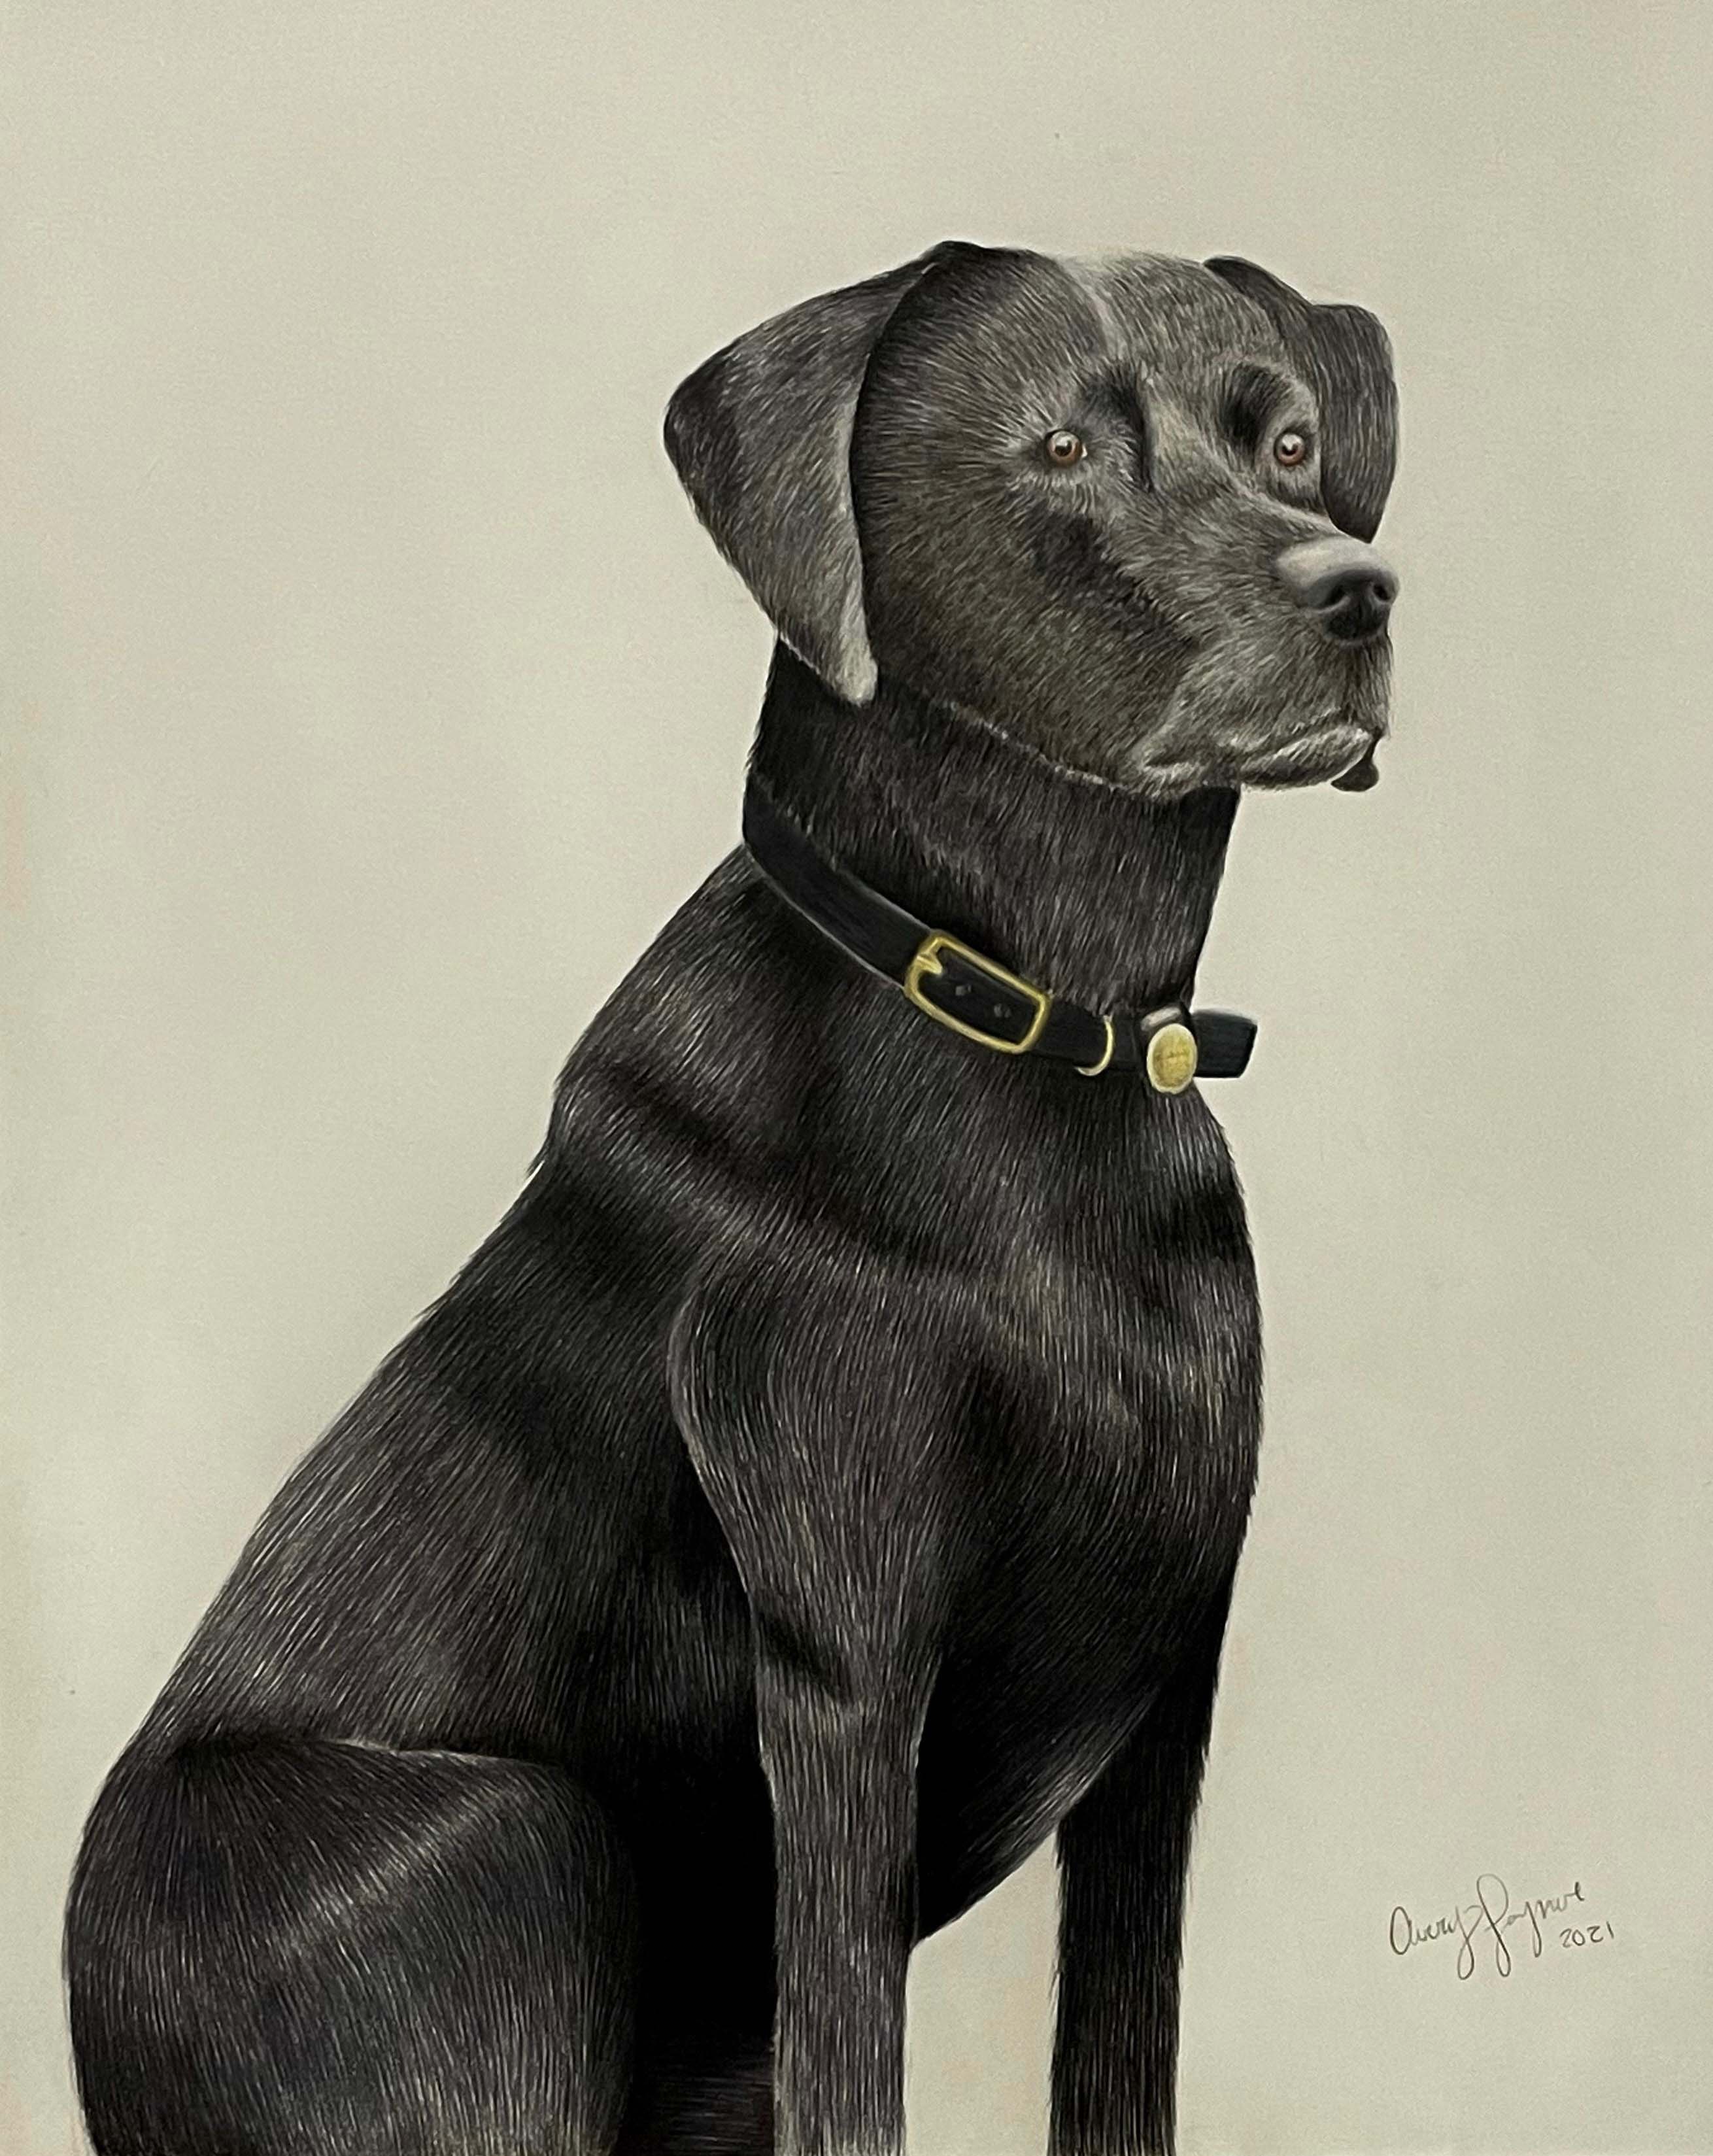 Dog portrait by Avery Joyner